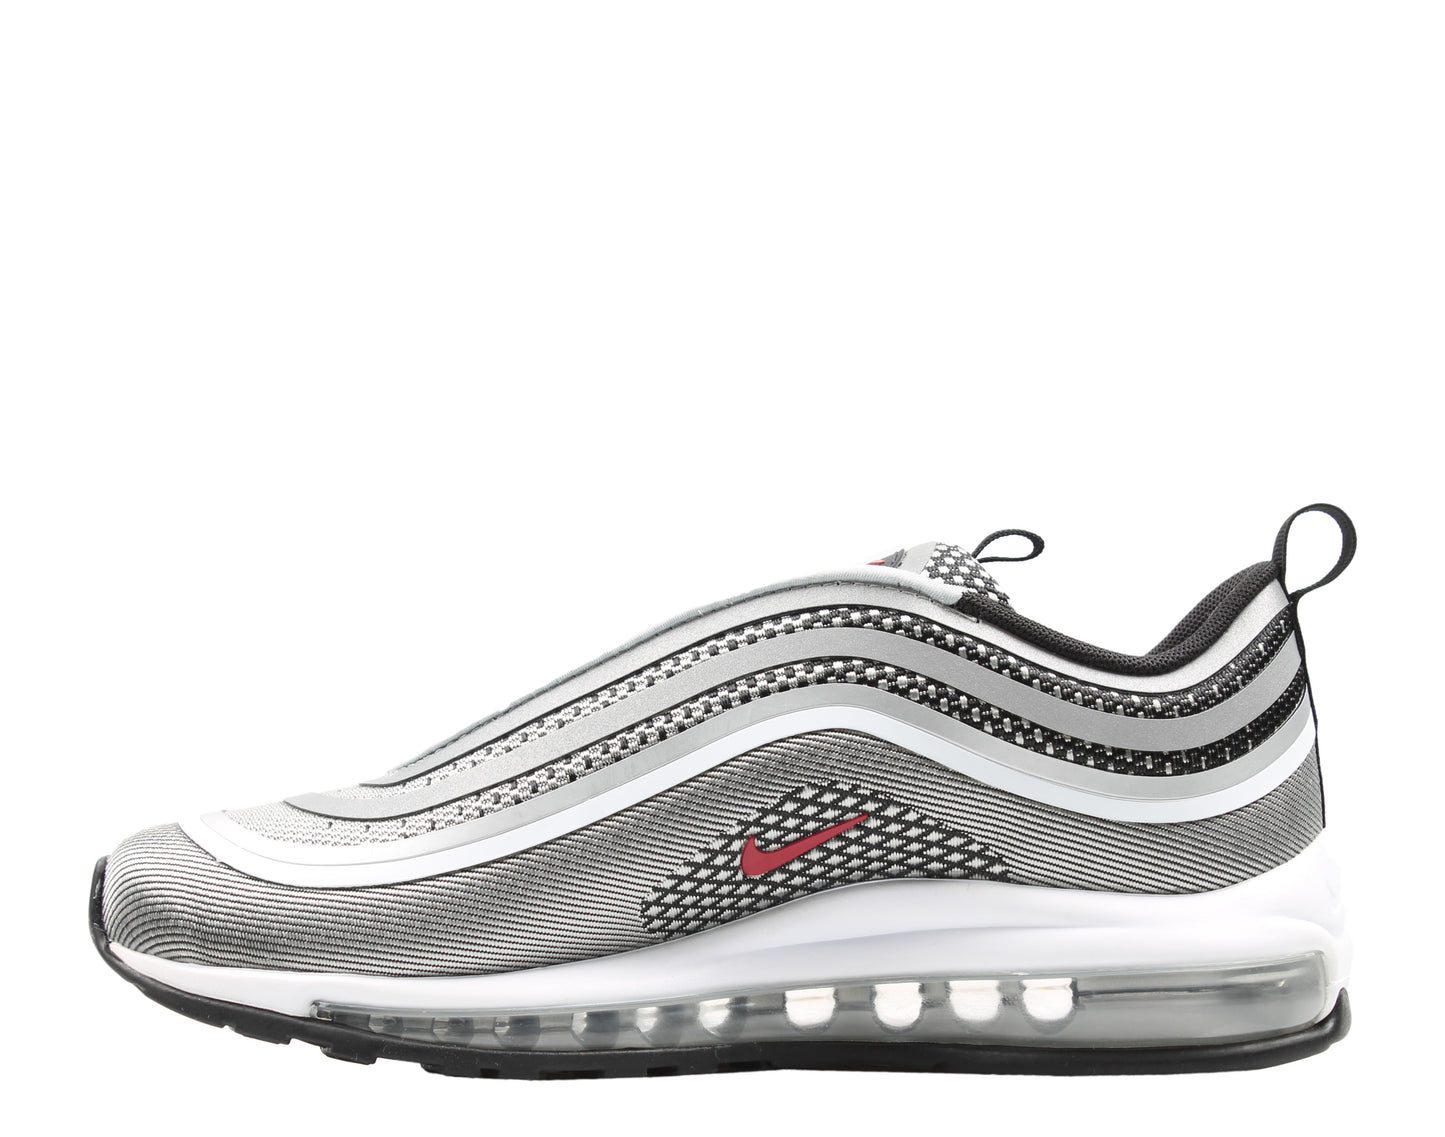 Nike Air Max 97 Ultra '17 Metallic Silver Bullet Men's Running Shoes 918356-003